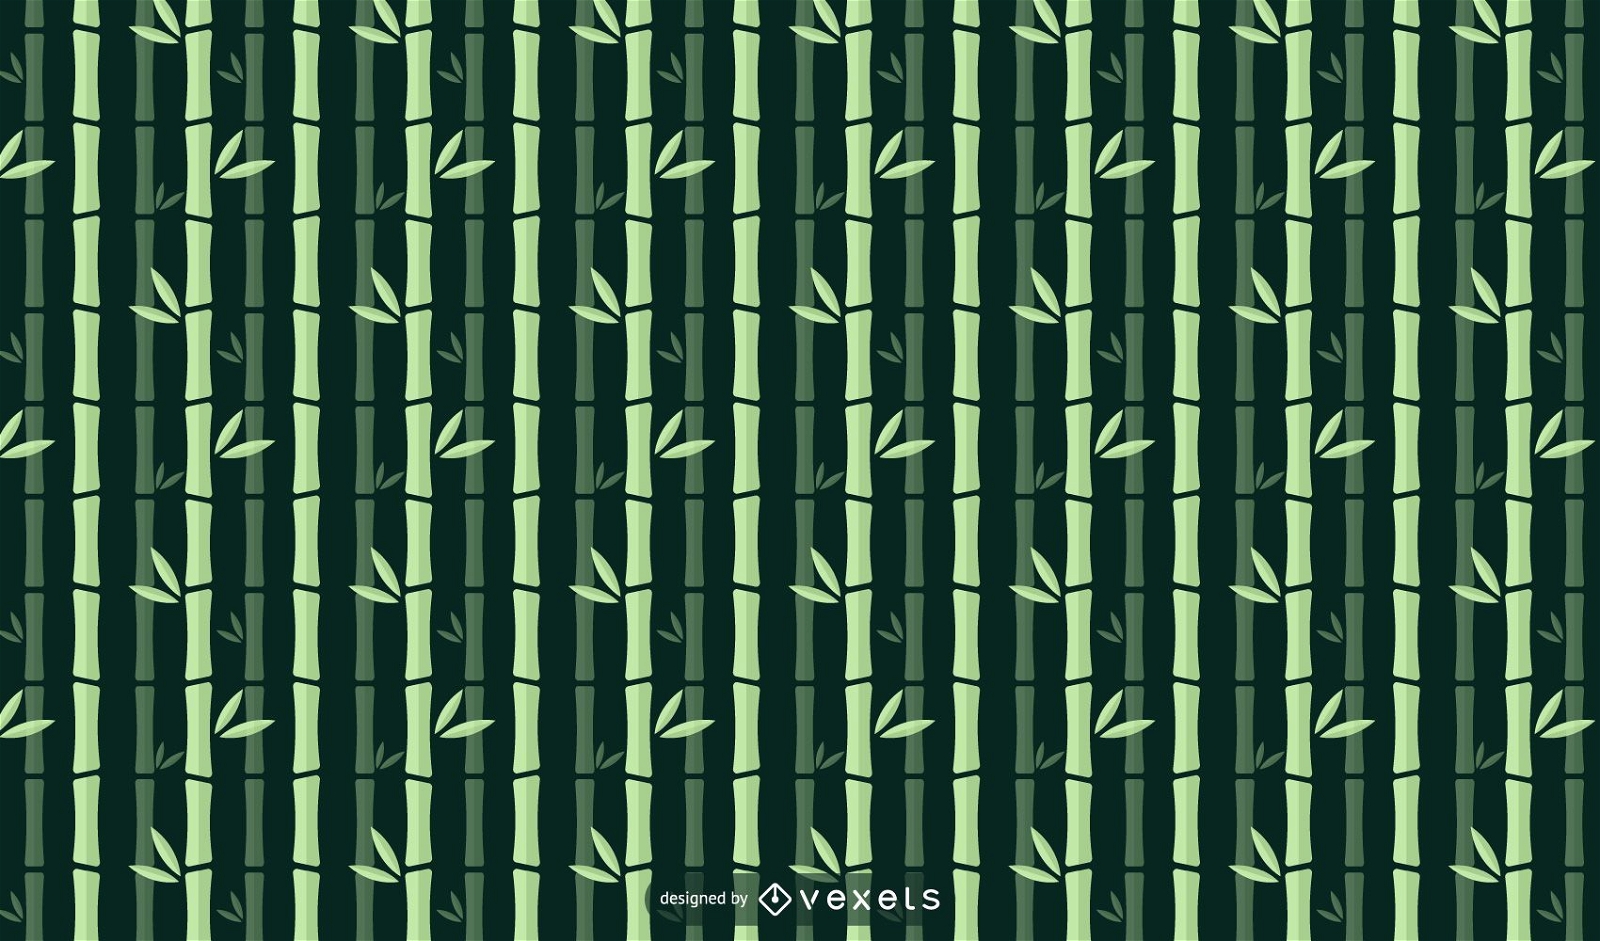 Flaches Musterdesign aus Bambus